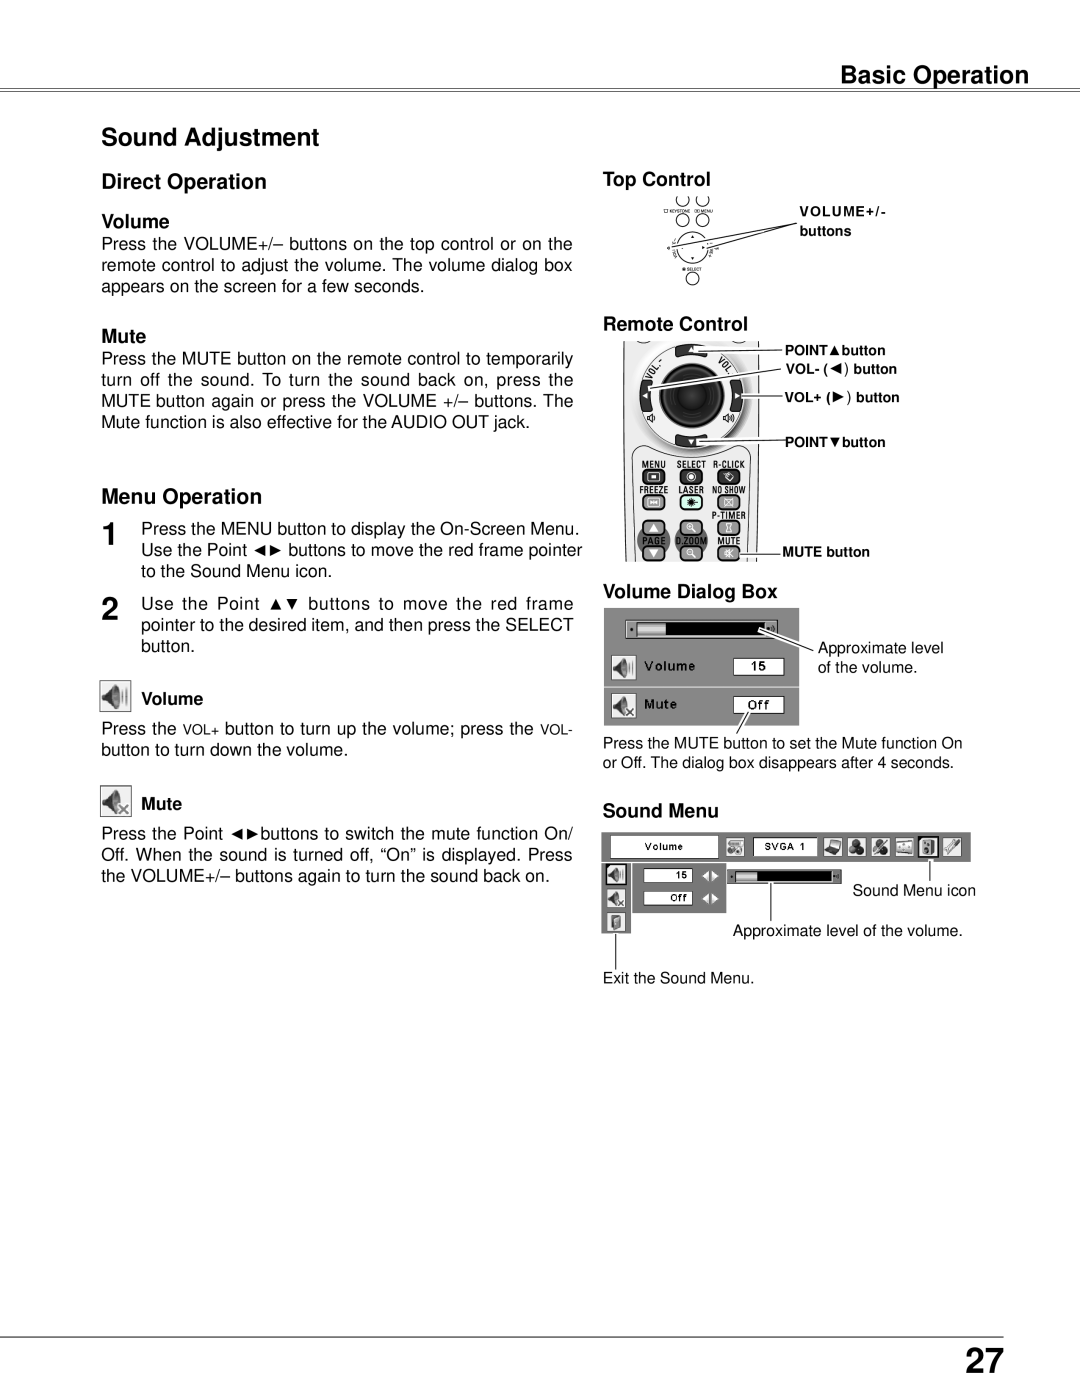 Eiki LC-XB42N owner manual Basic Operation, Sound Adjustment, Direct Operation, Menu Operation 